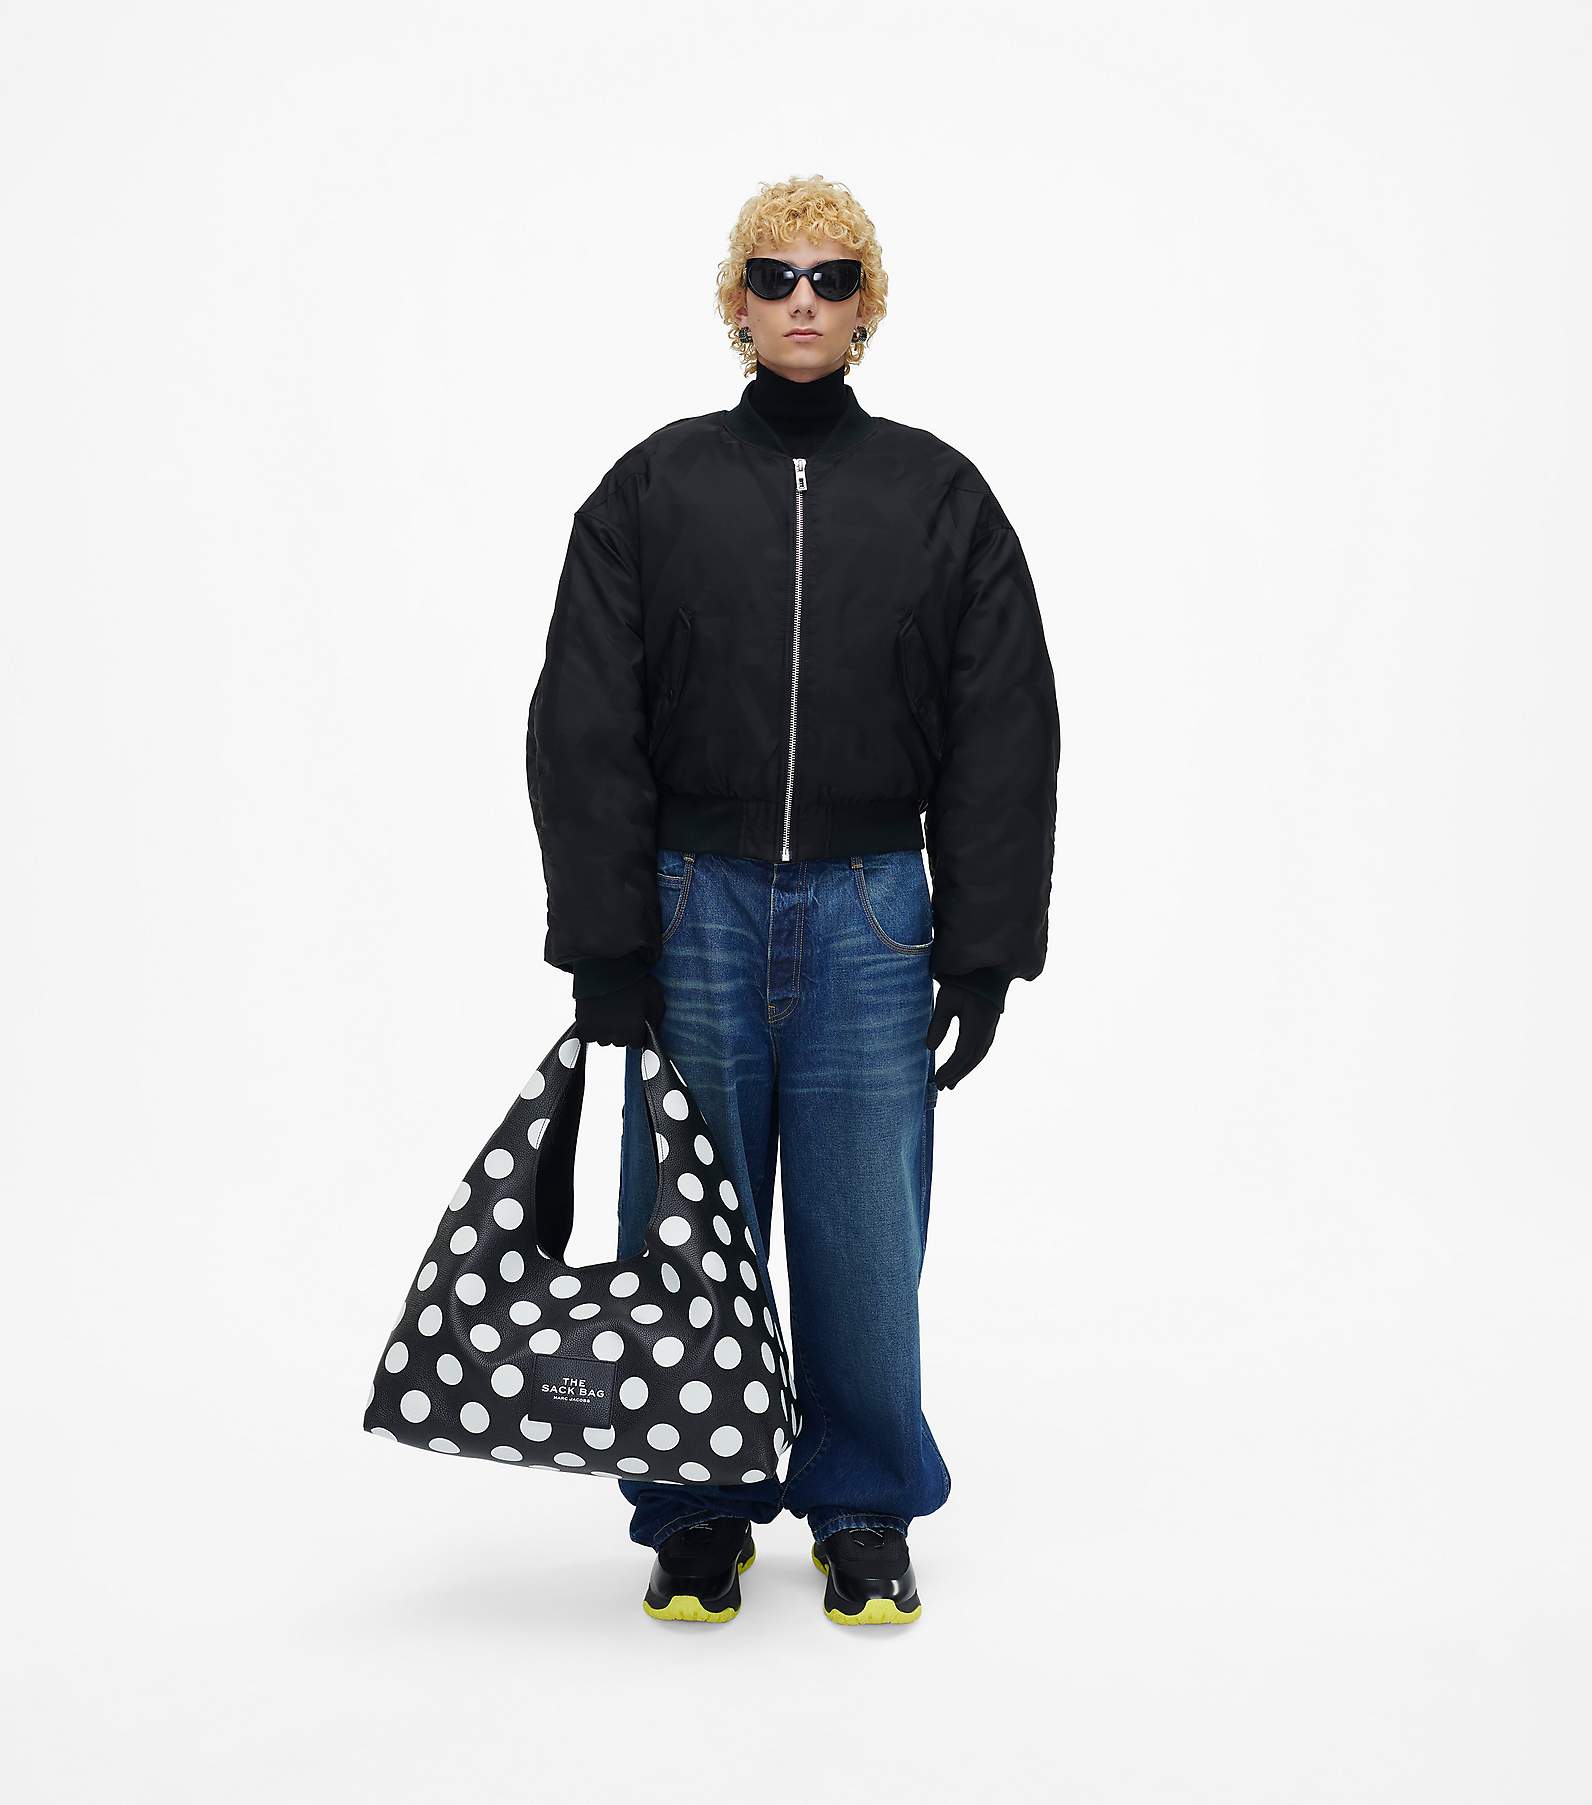 Marc Jacobs The Spots Mini Leather Sack Bag